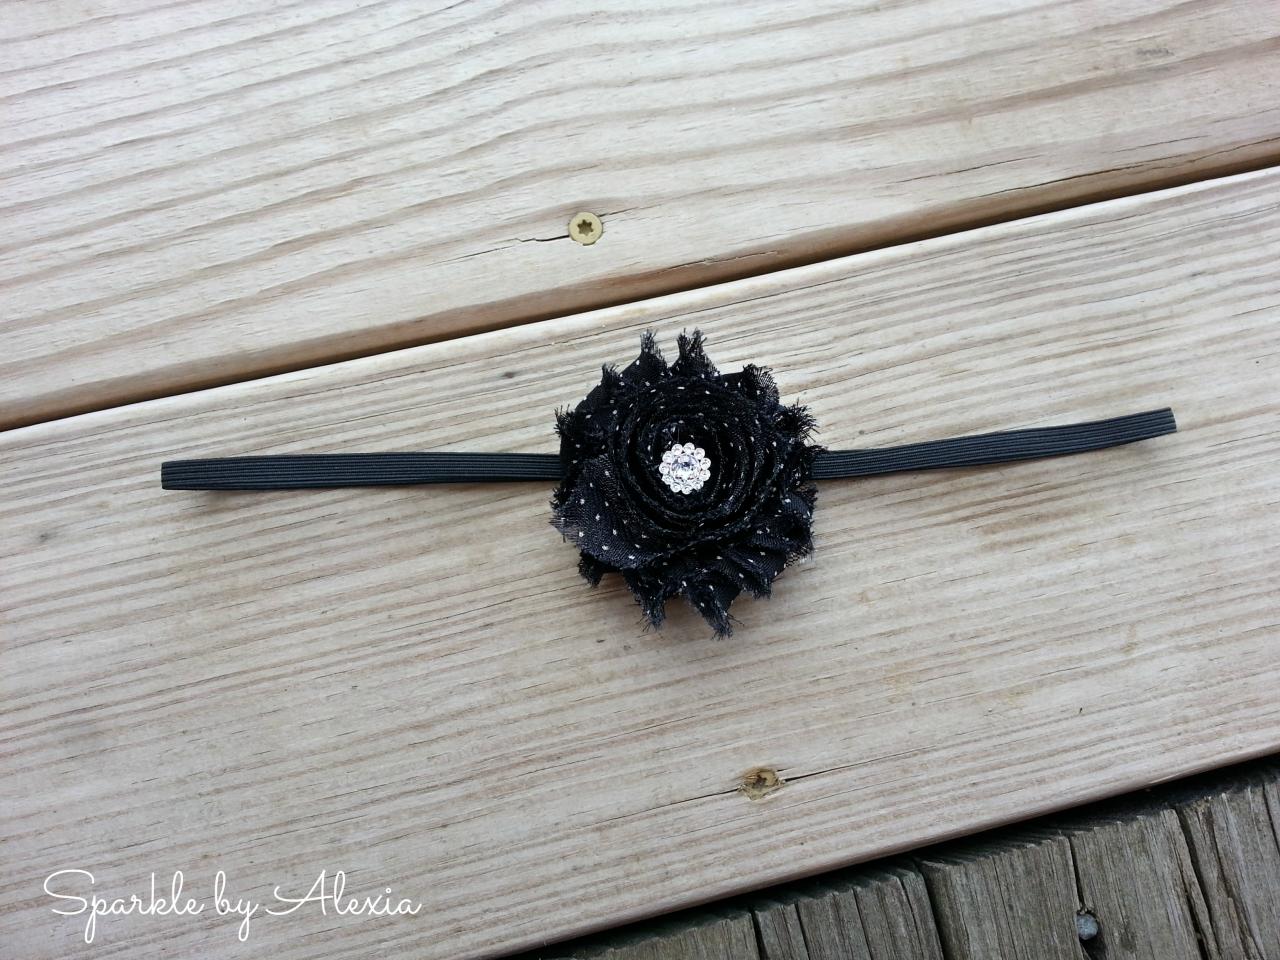 Black Shabby Flower Stretch Headband